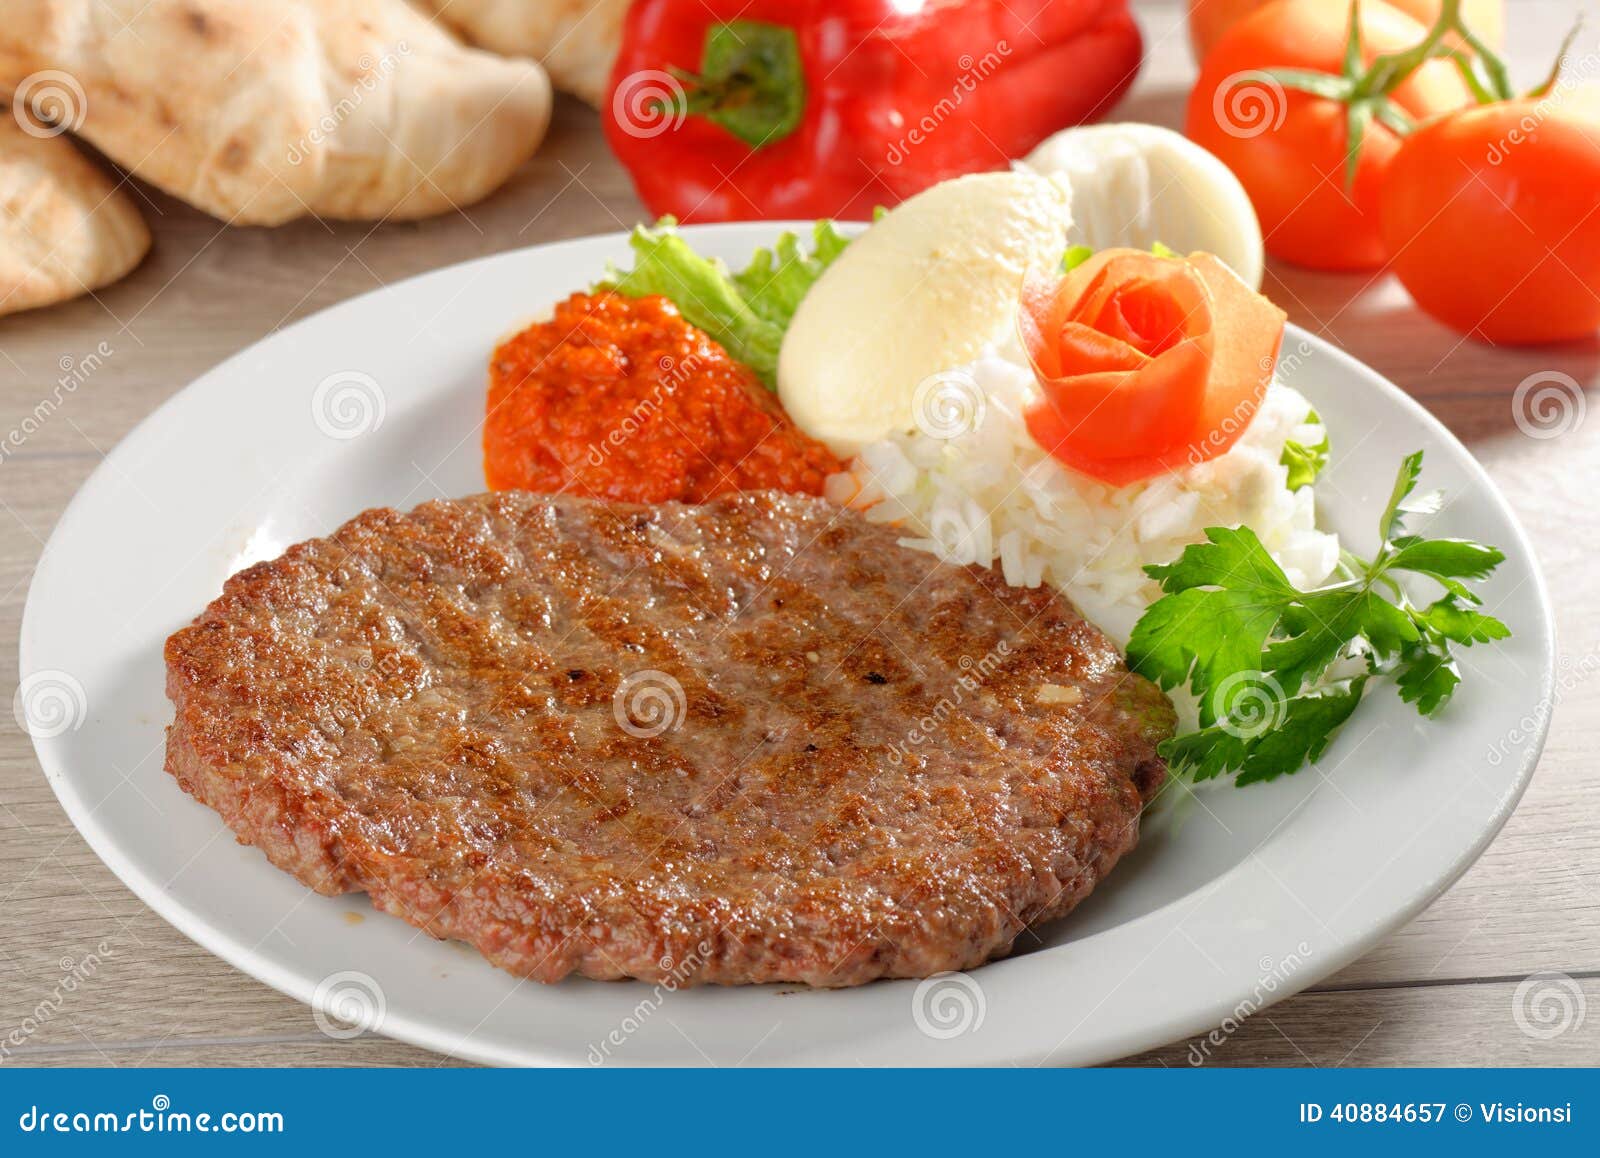 presliced traditional burger patty called pljeskavica